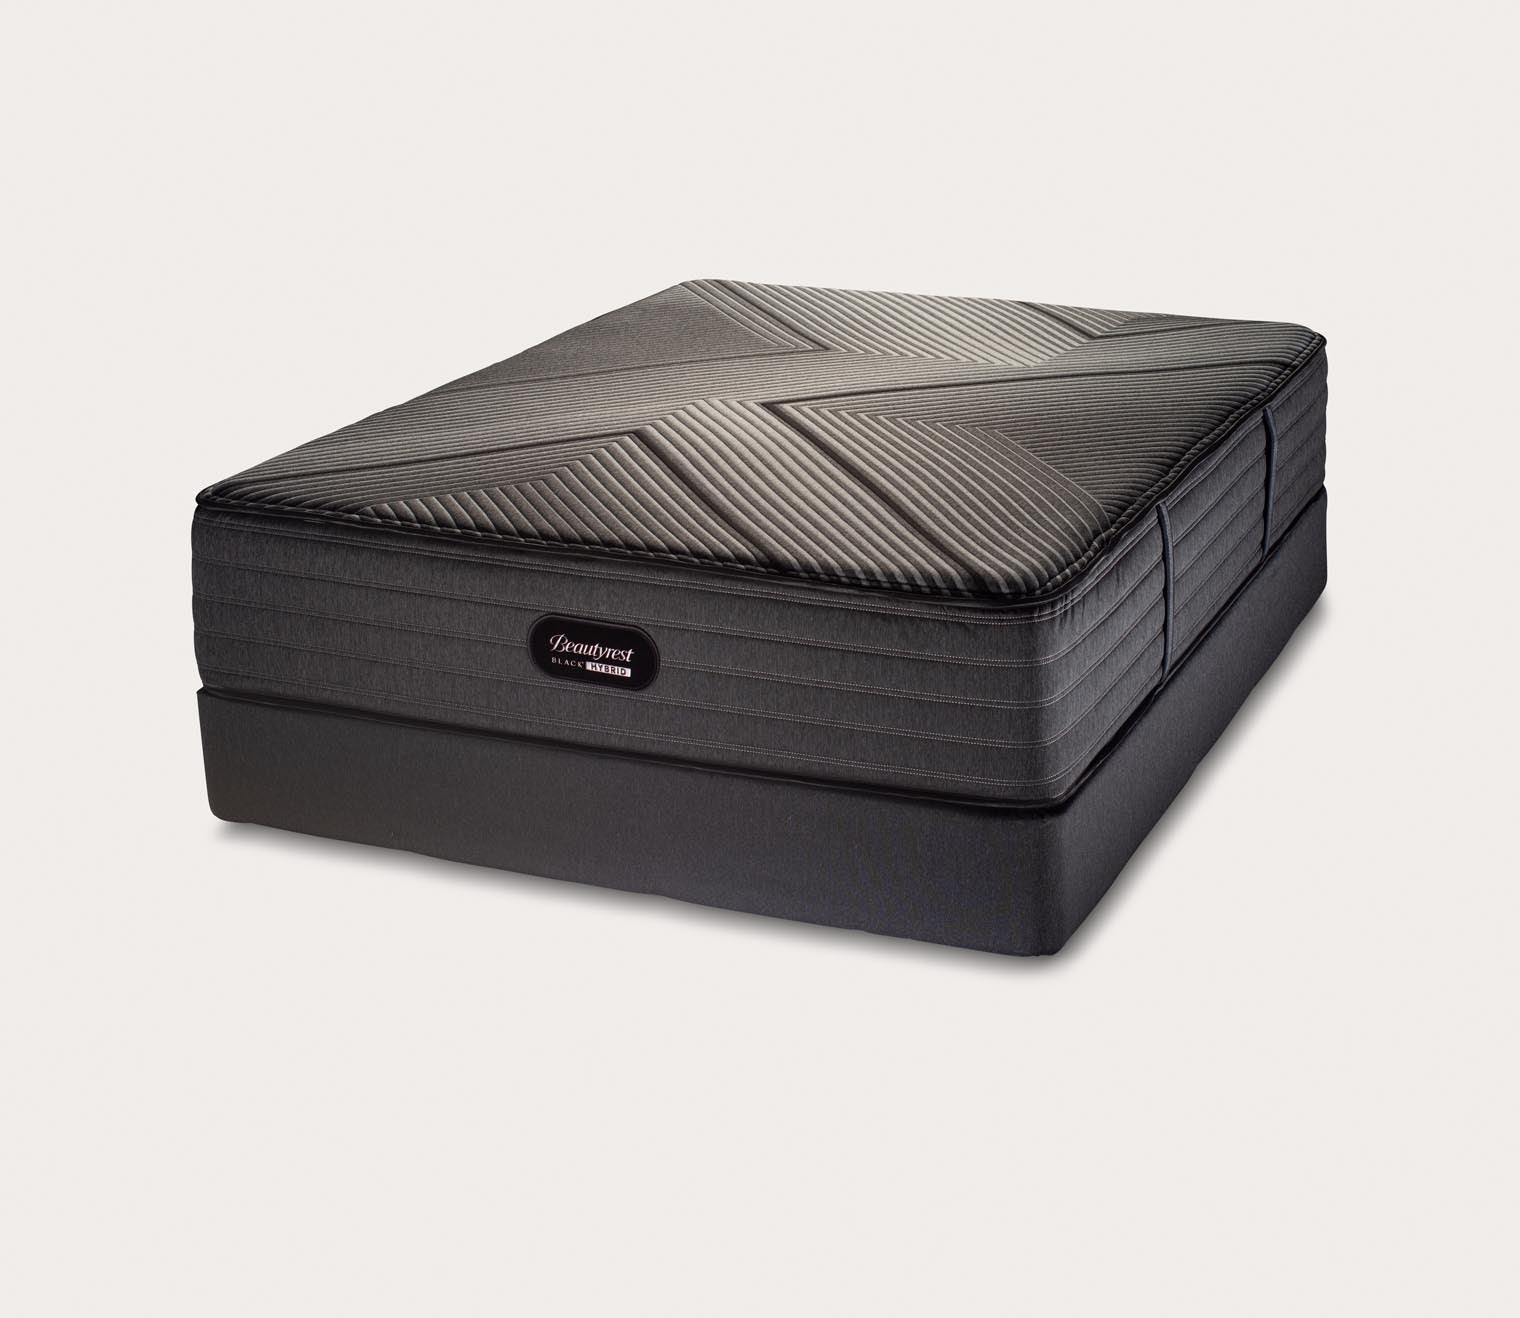 Beautyrest Black Hybrid LX-Class Medium Mattress - FLOOR SAMPLE by Simmons